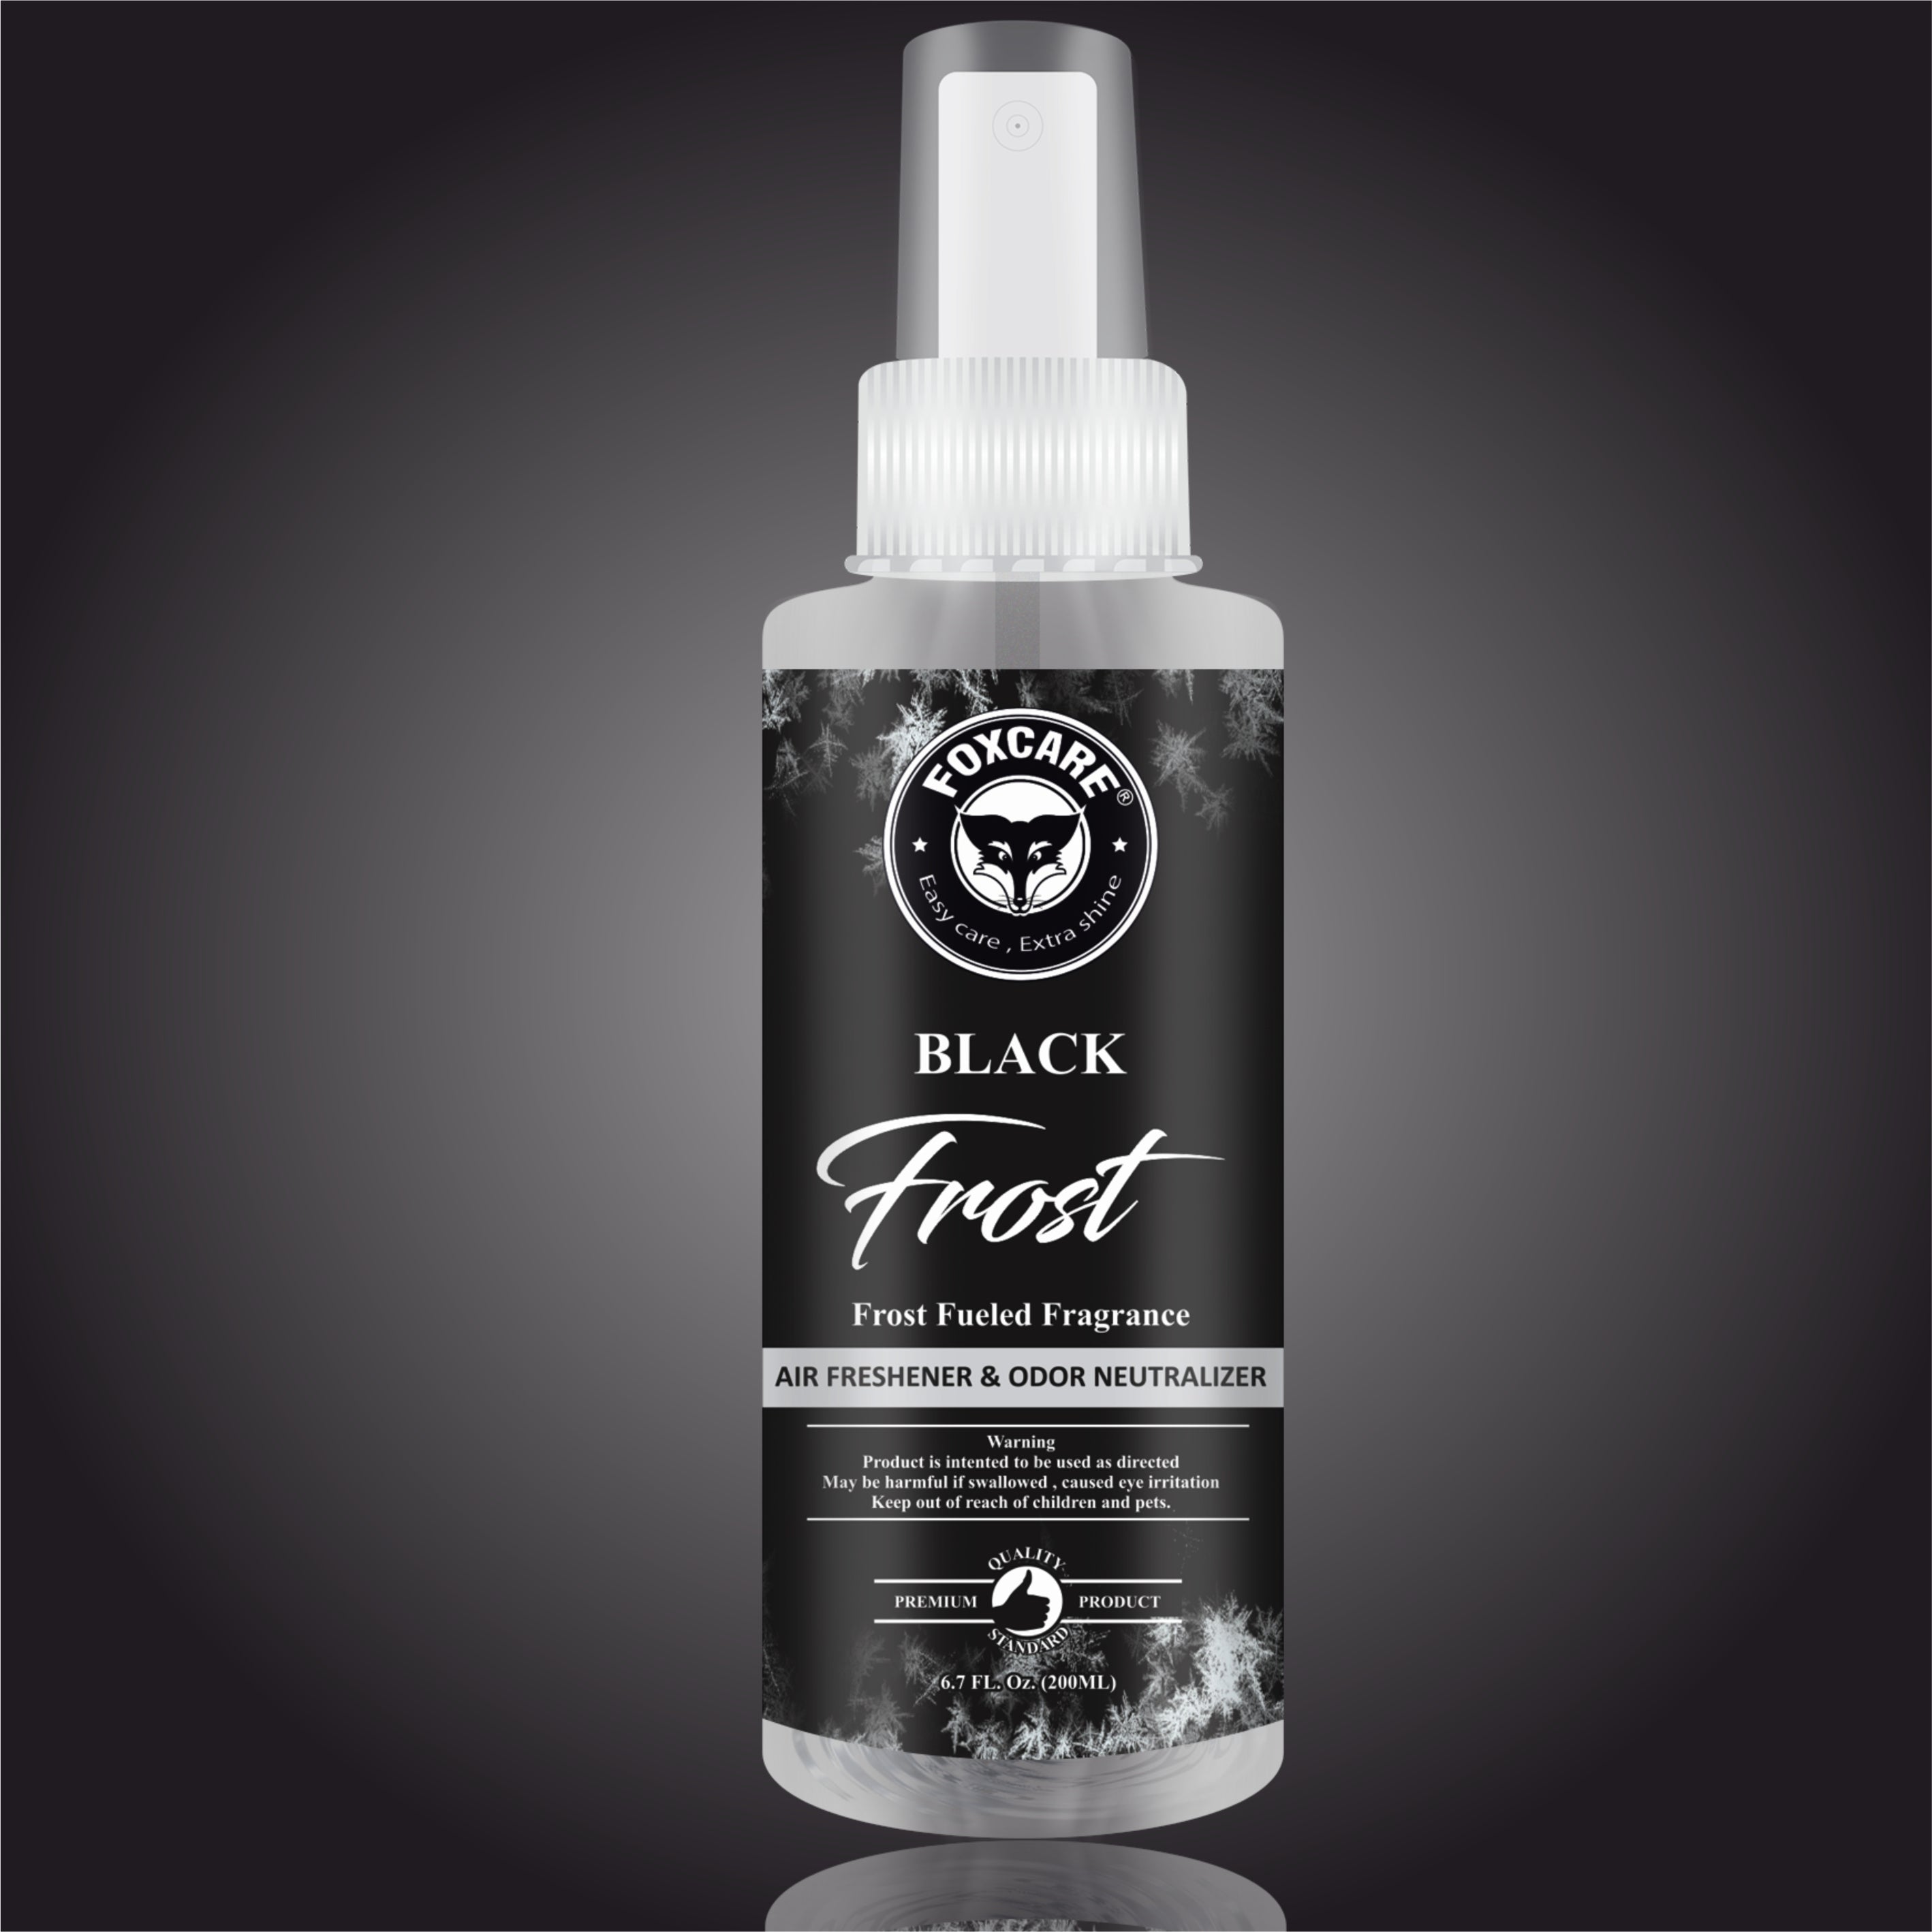 FOXCARE BLACK FROST AIR FRESHENER & ODOR NEUTRALIZER(200 ml)